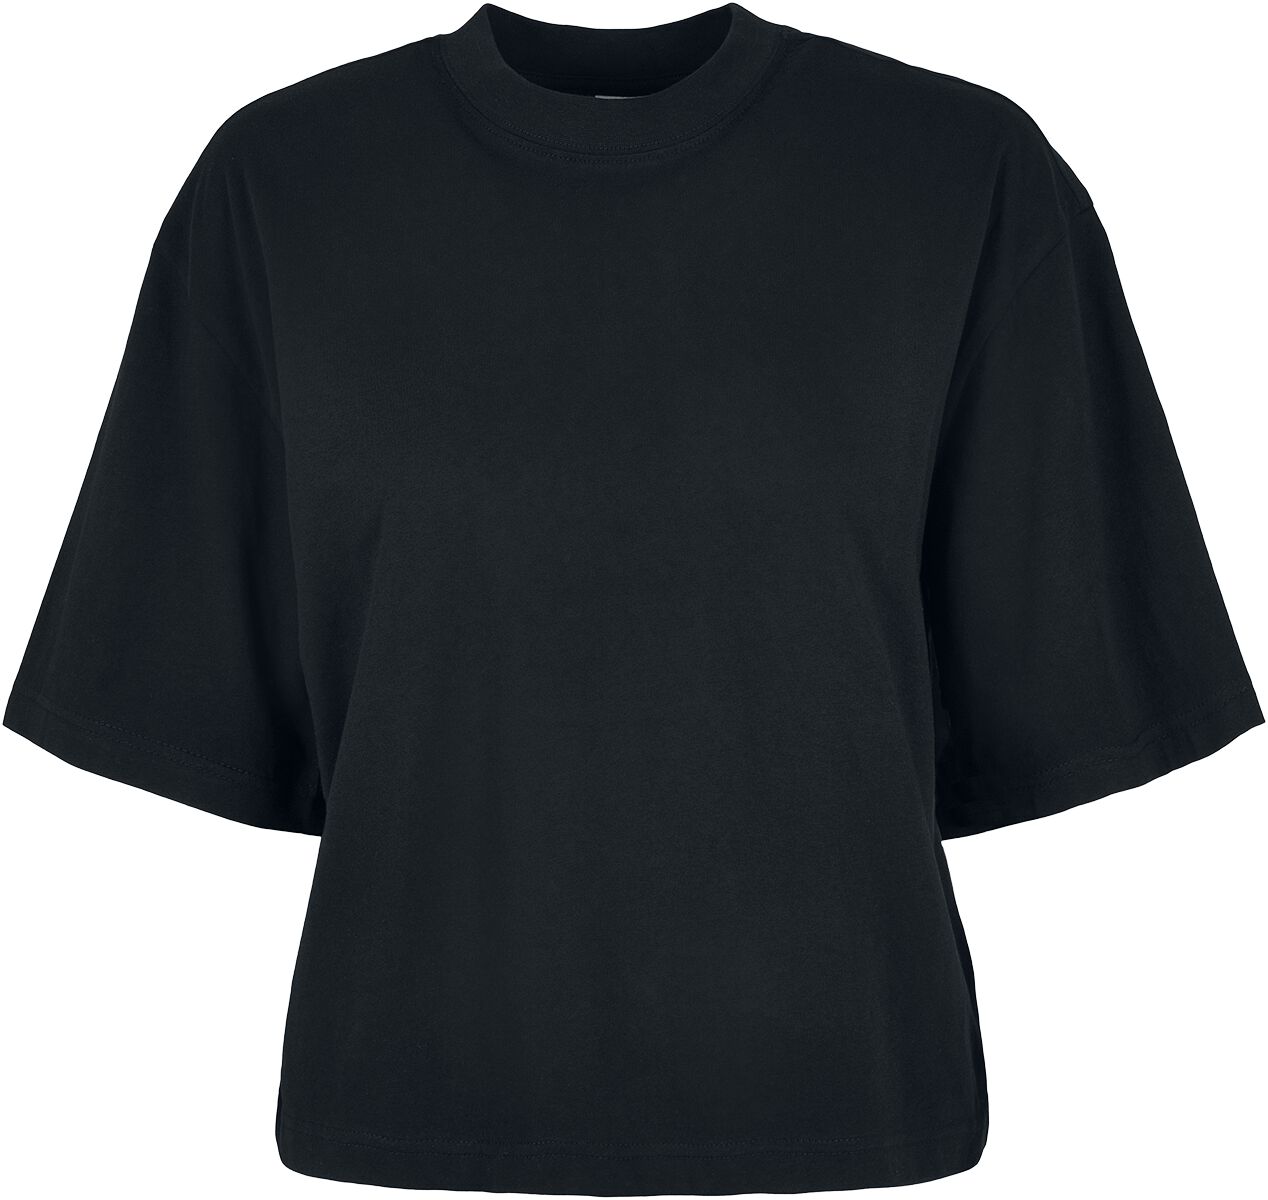 Image of T-Shirt di Urban Classics - XS a 5XL - Donna - nero